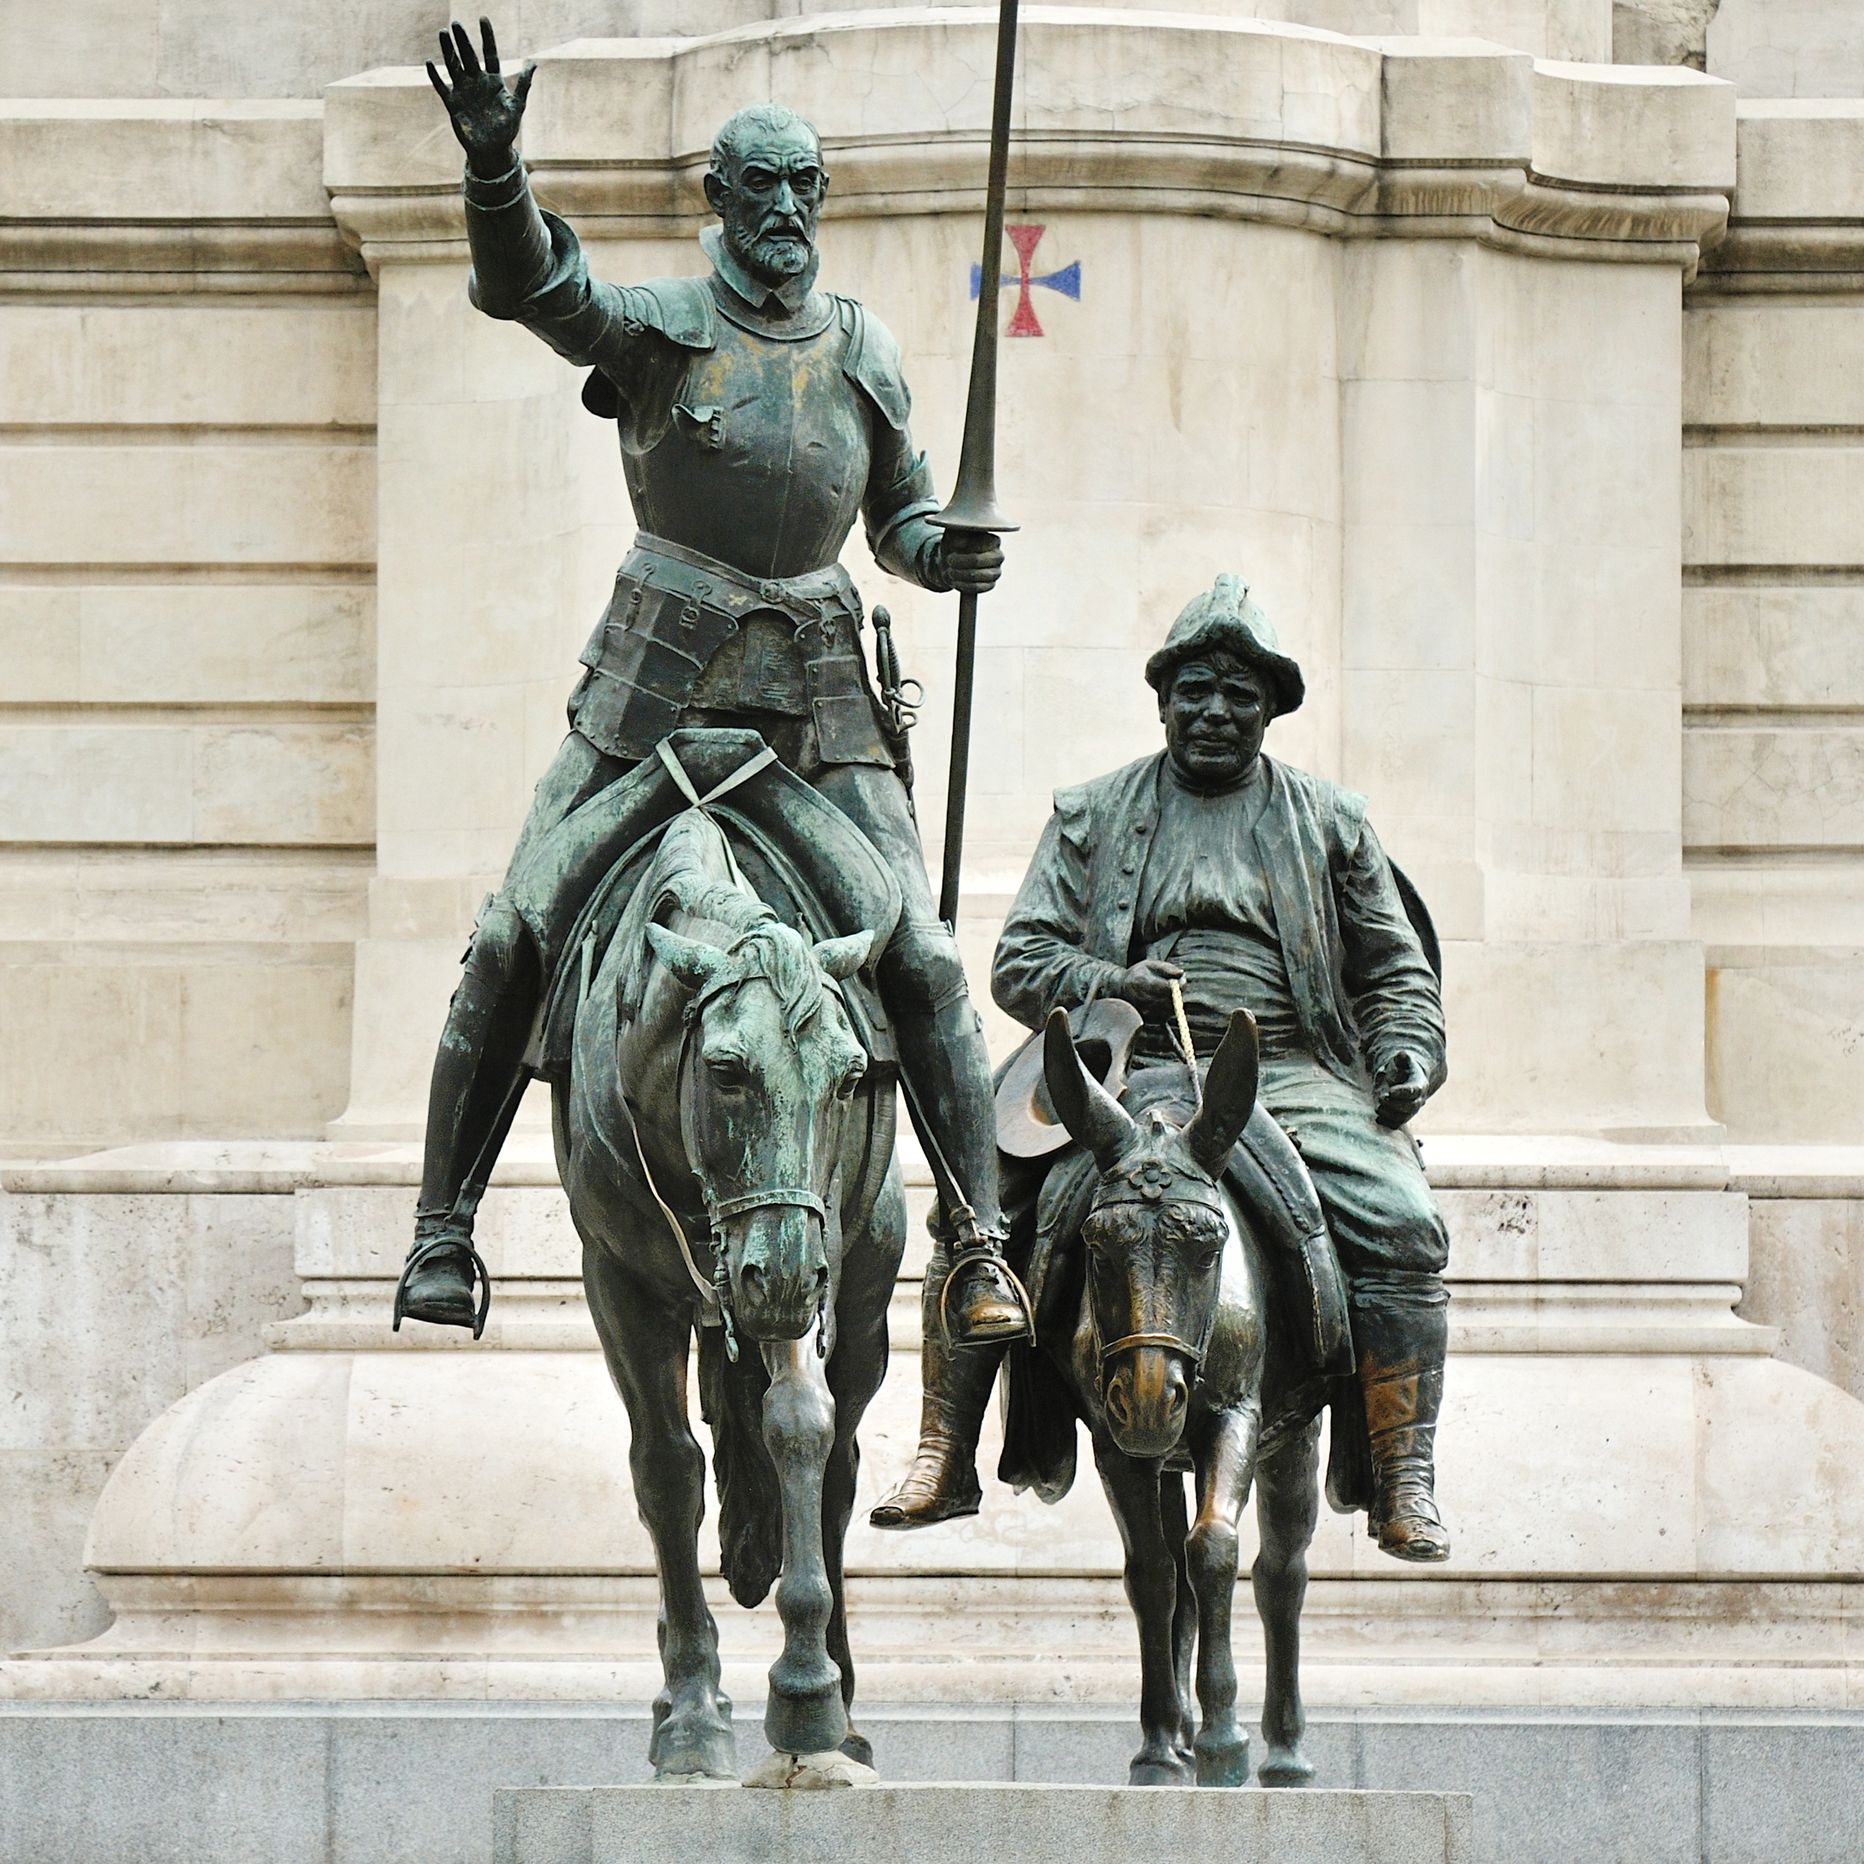 Hispaanias Madridis asuv monument rüütel (hidalgo) don don Quijotest ja ta kannupoisist Sancho Panzast